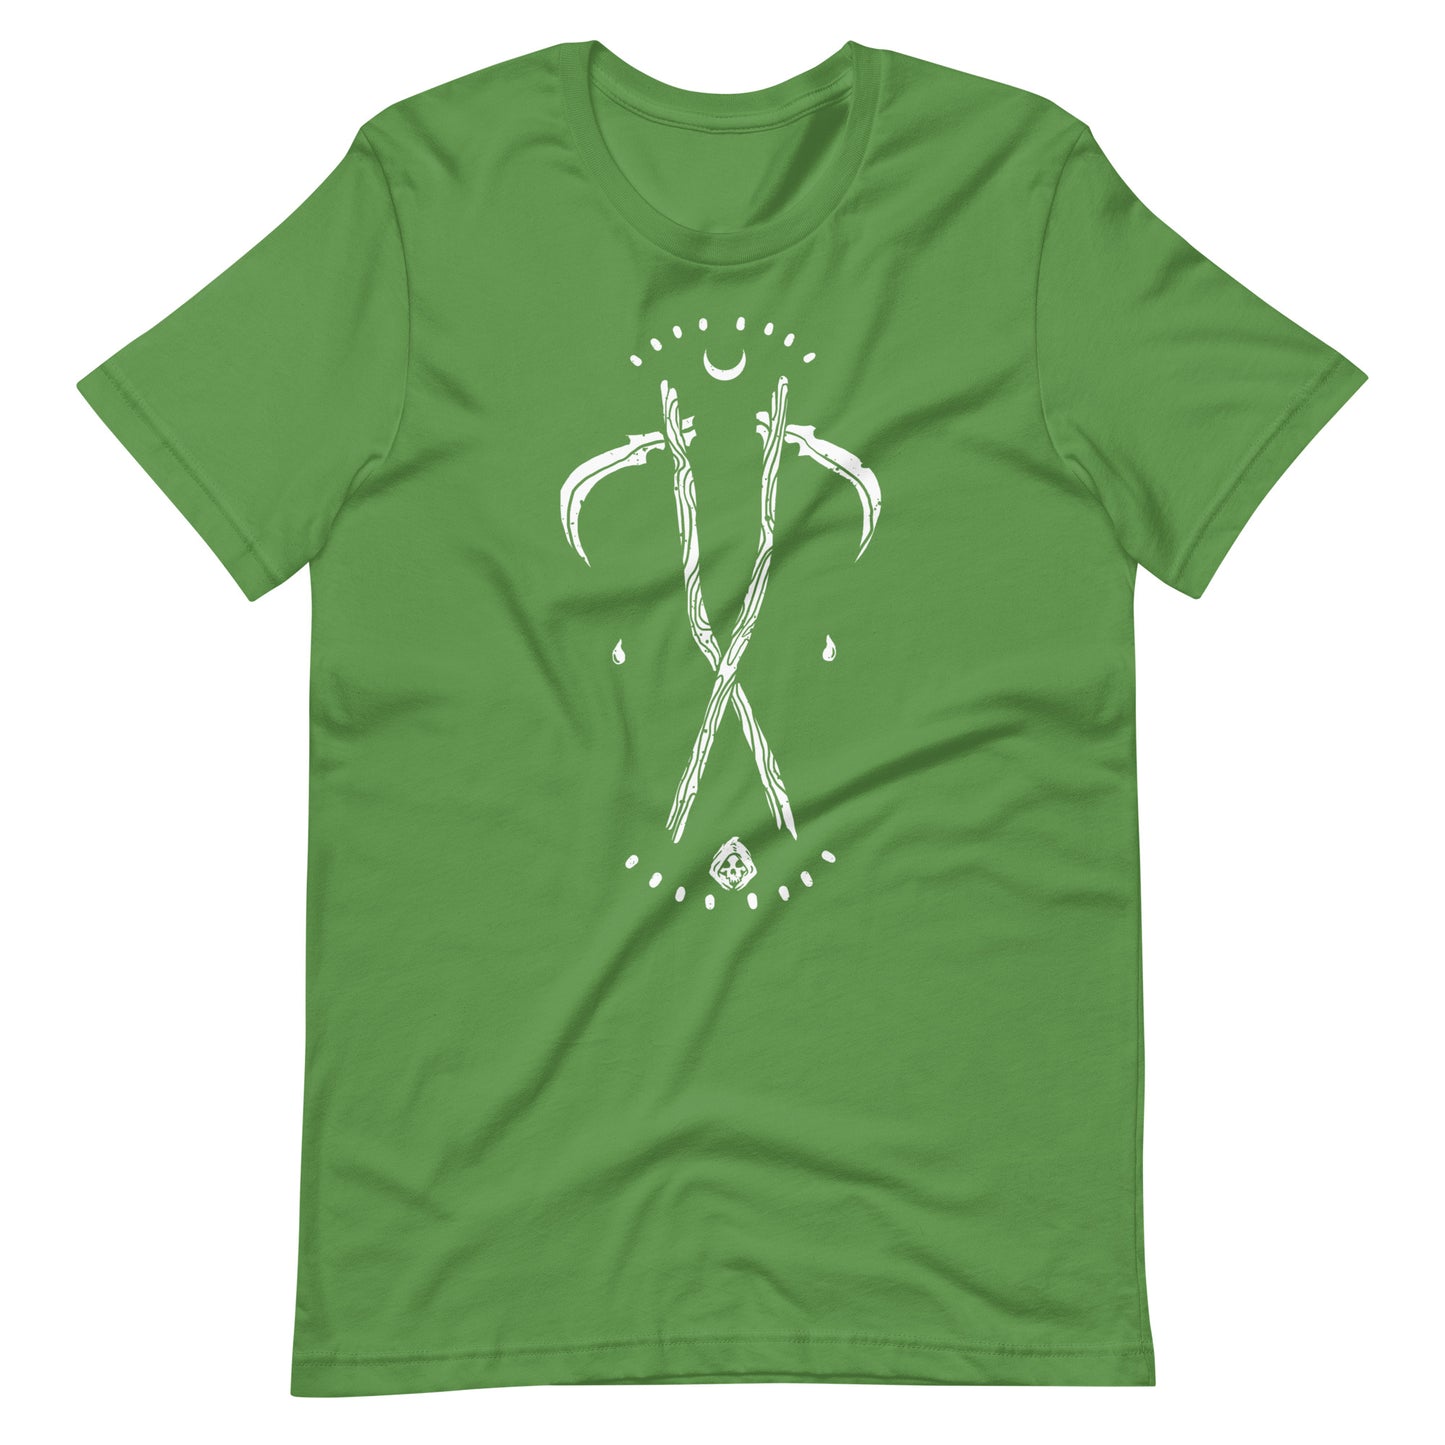 Grim - Men's t-shirt - Leaf Front